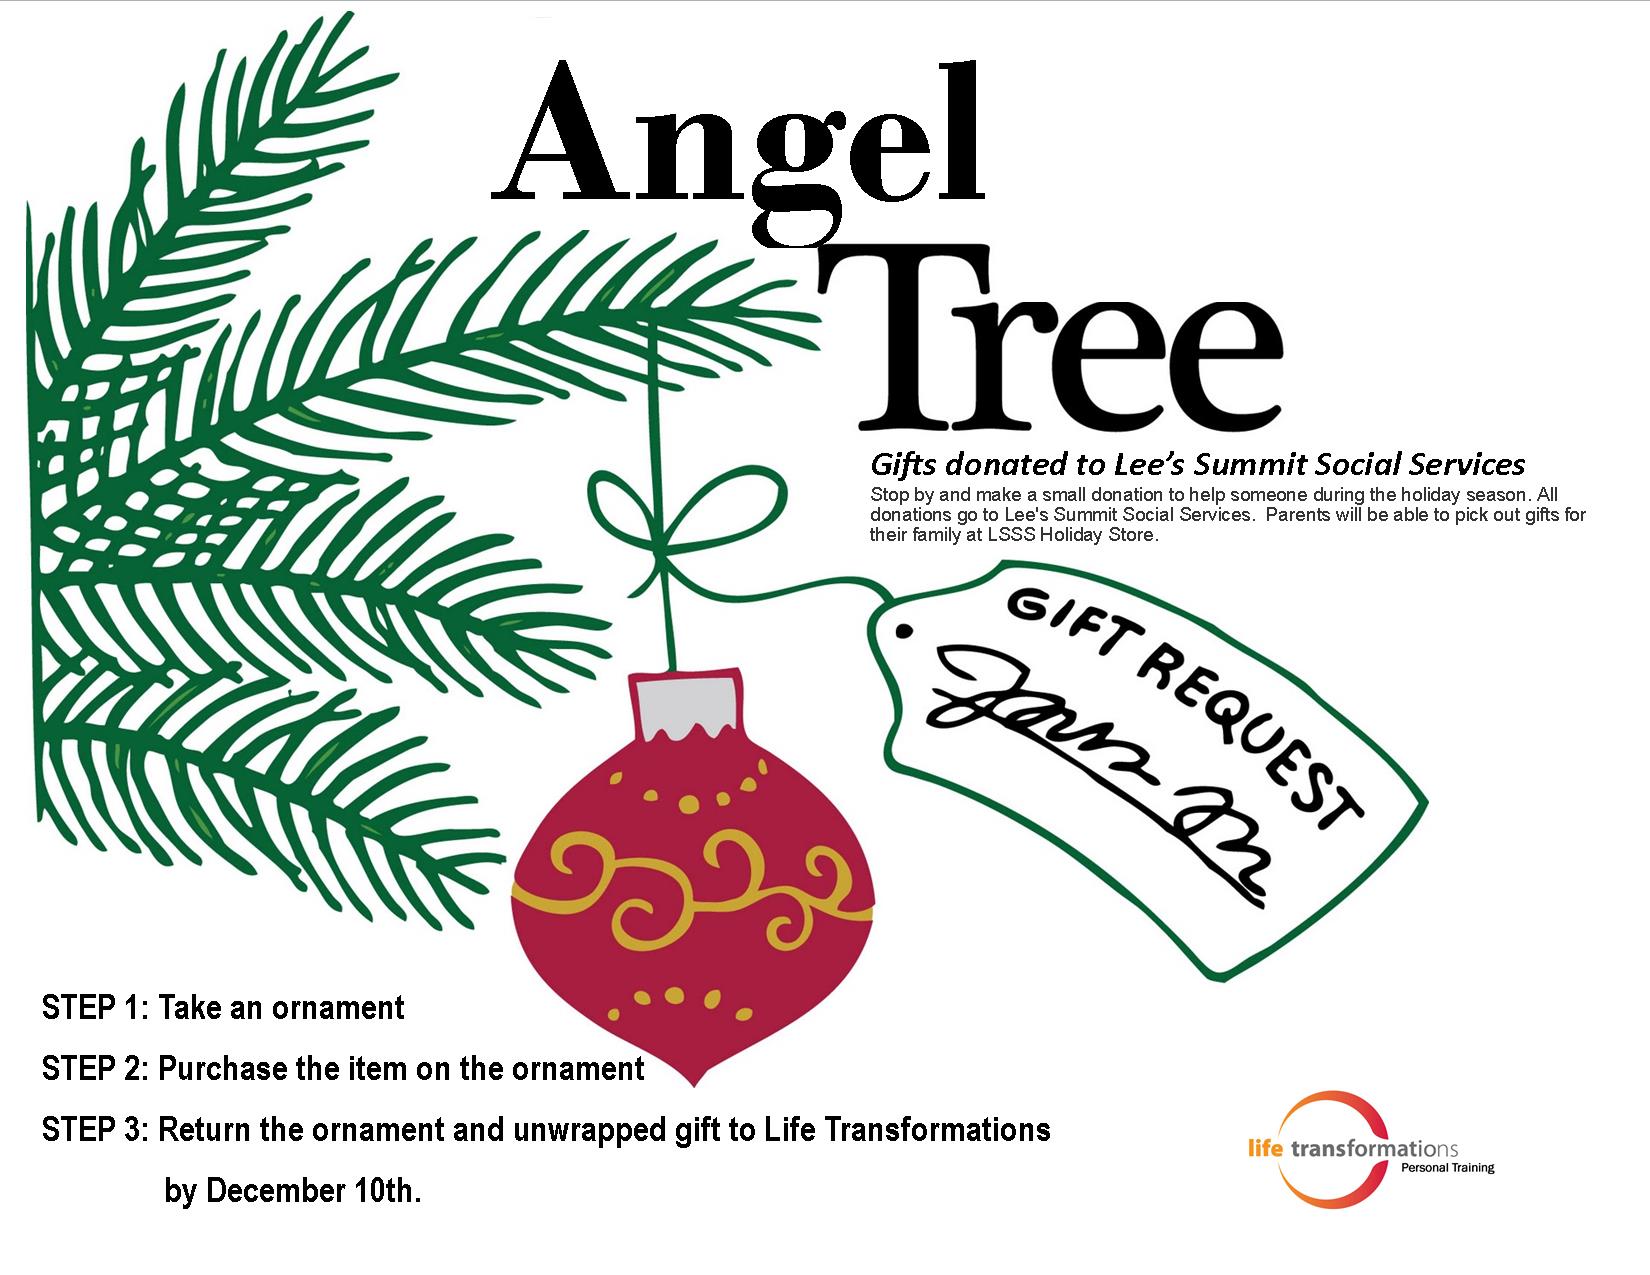 Lee's Summit Angel Tree - Life Transformations